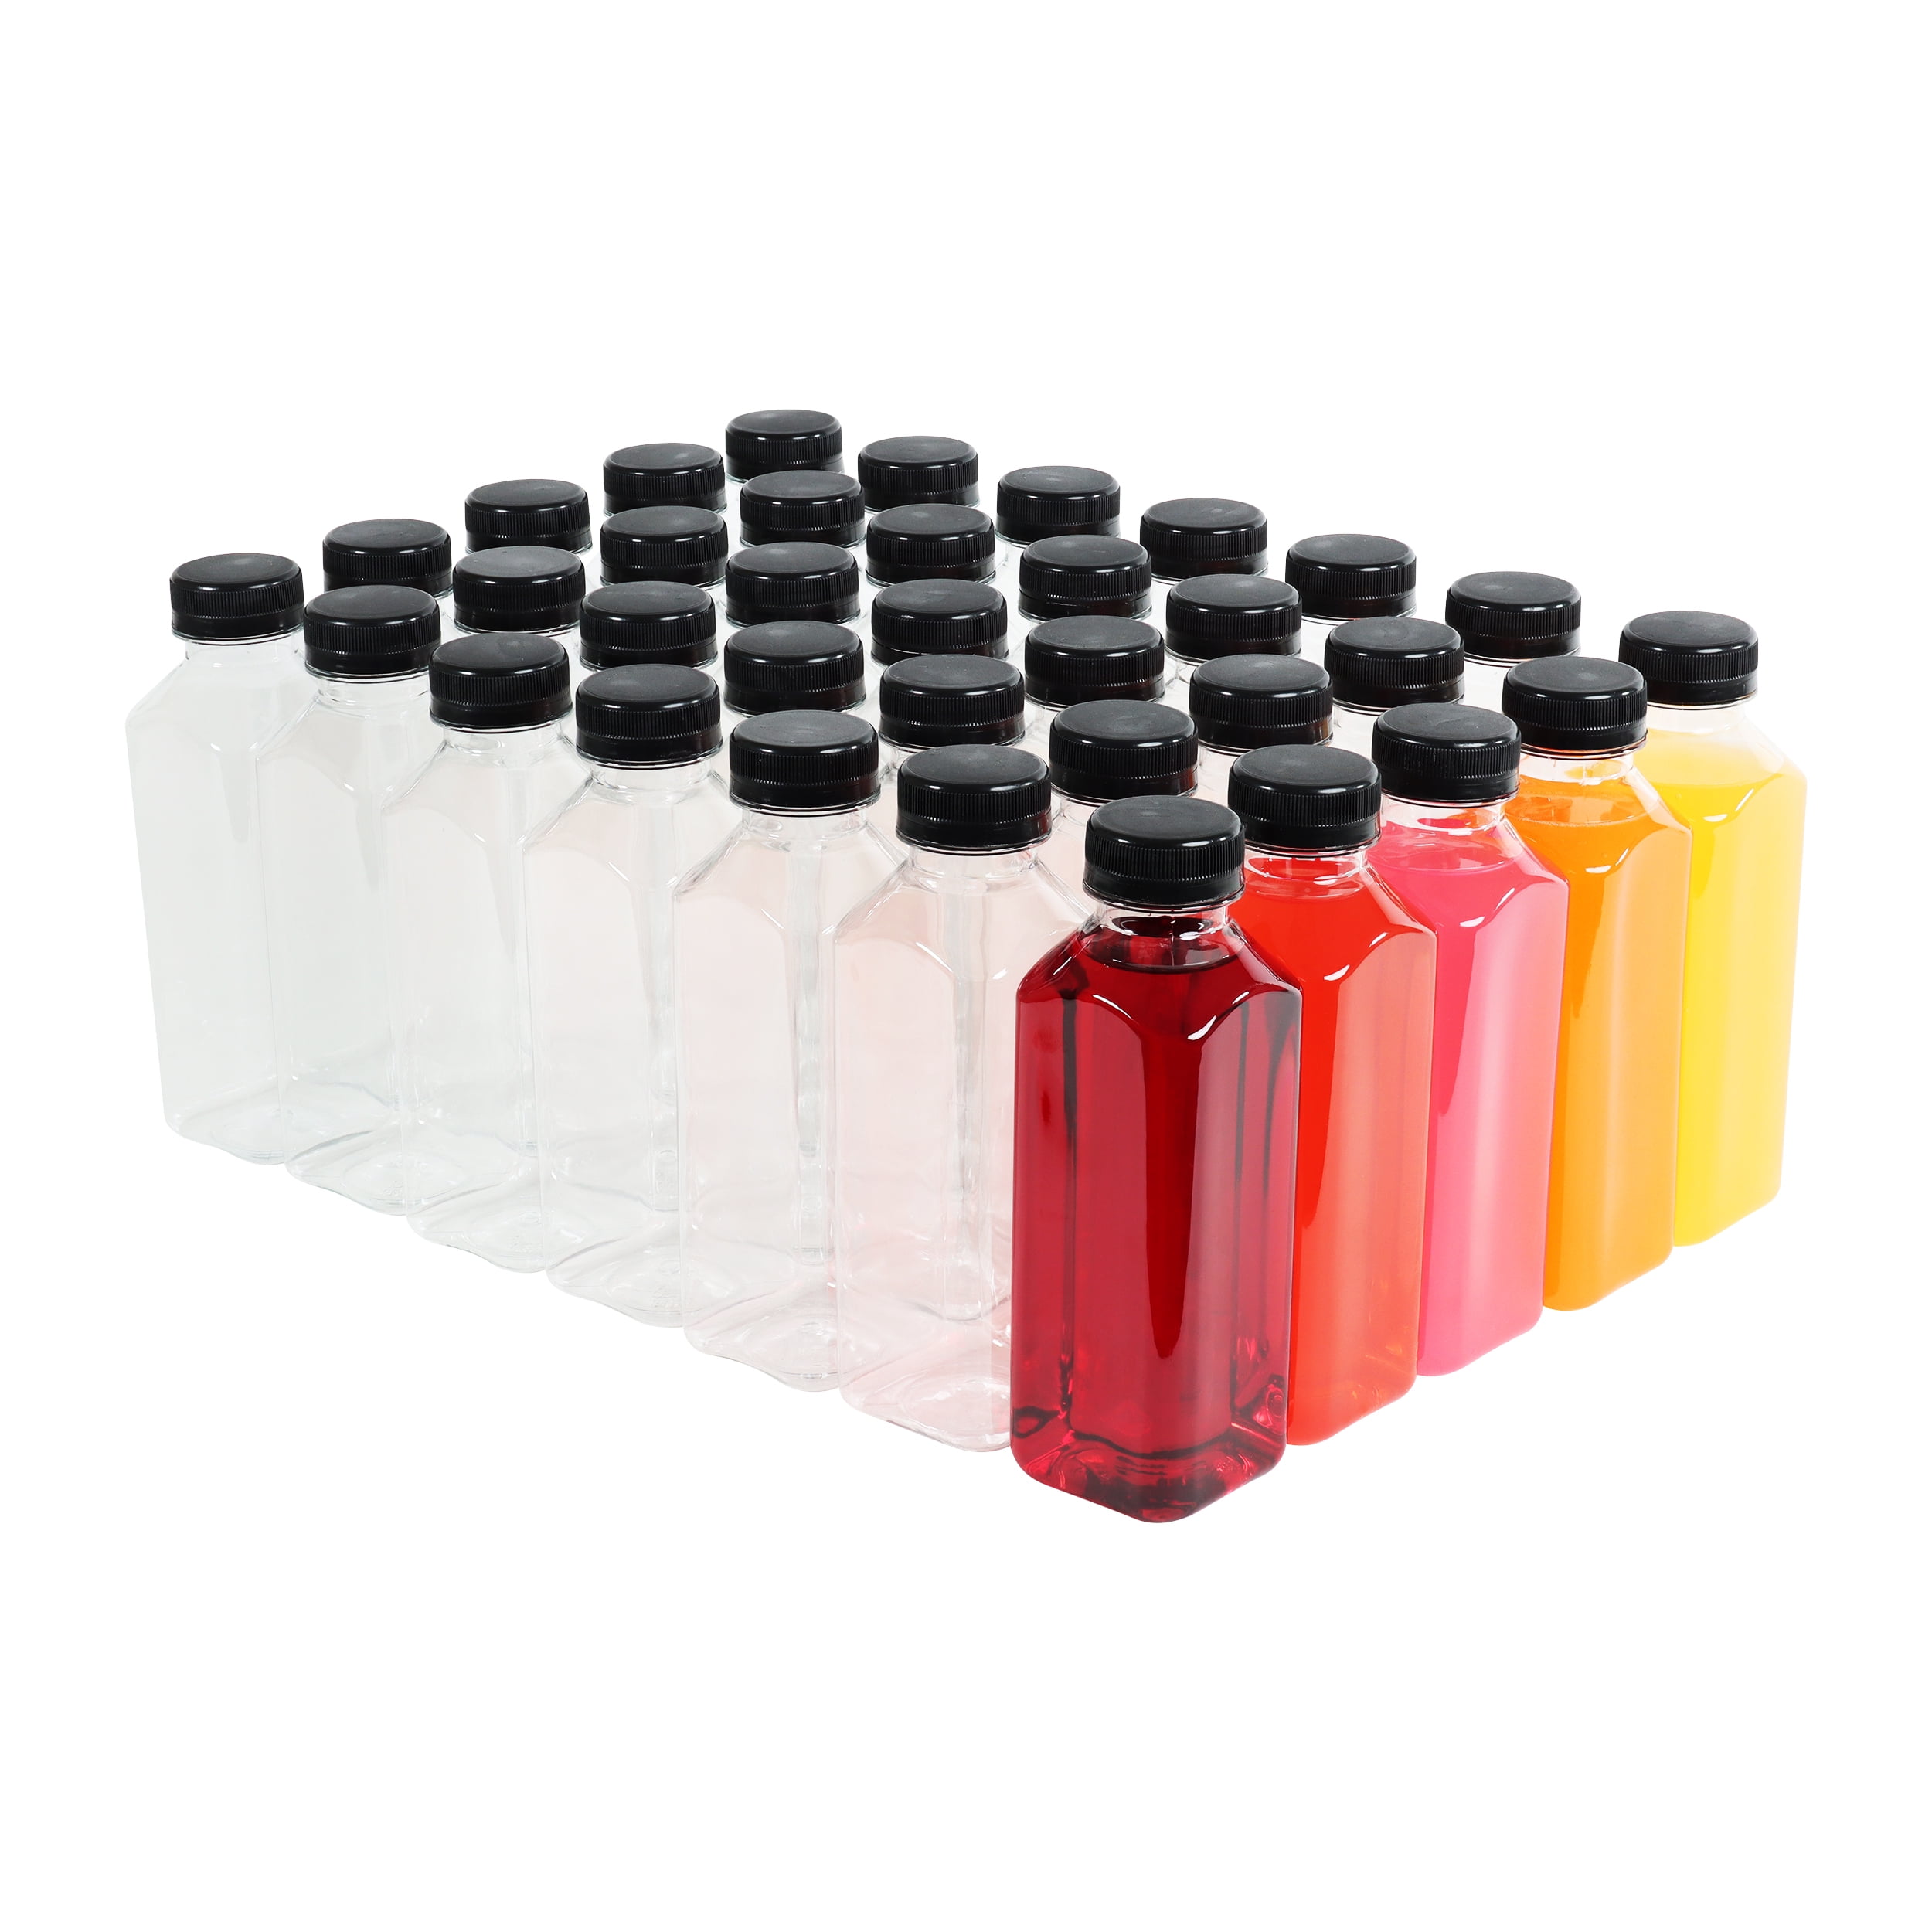  4 OZ Plastic Juice Bottles, Reusable Bulk Beverage Containers,  Comes Black lid, for Juice, Milk and Other Beverages, 10 Pcs. : Home &  Kitchen